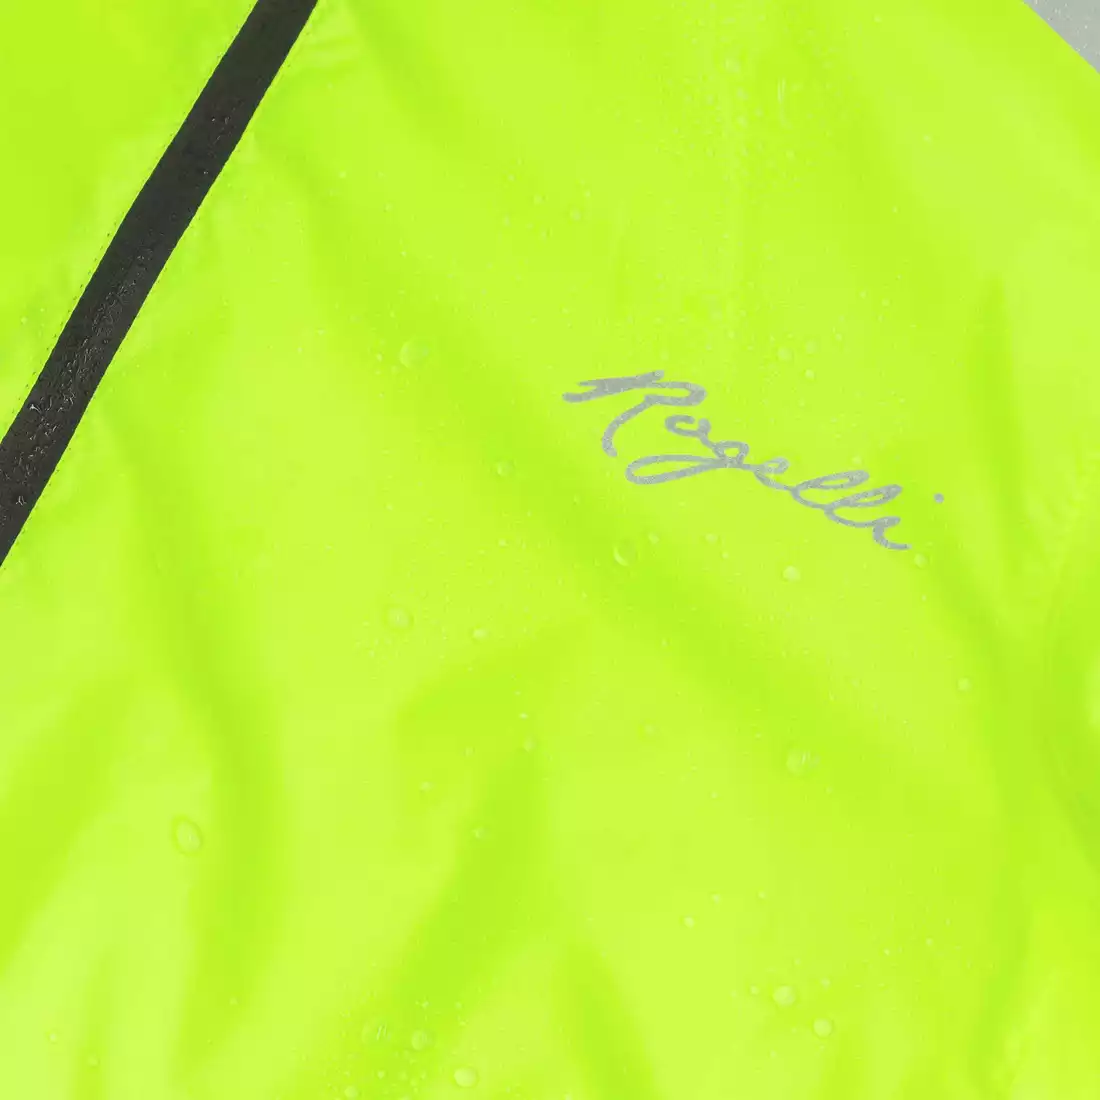 ROGELLI CORE dámská cyklistická bunda do deště žlutý fluor